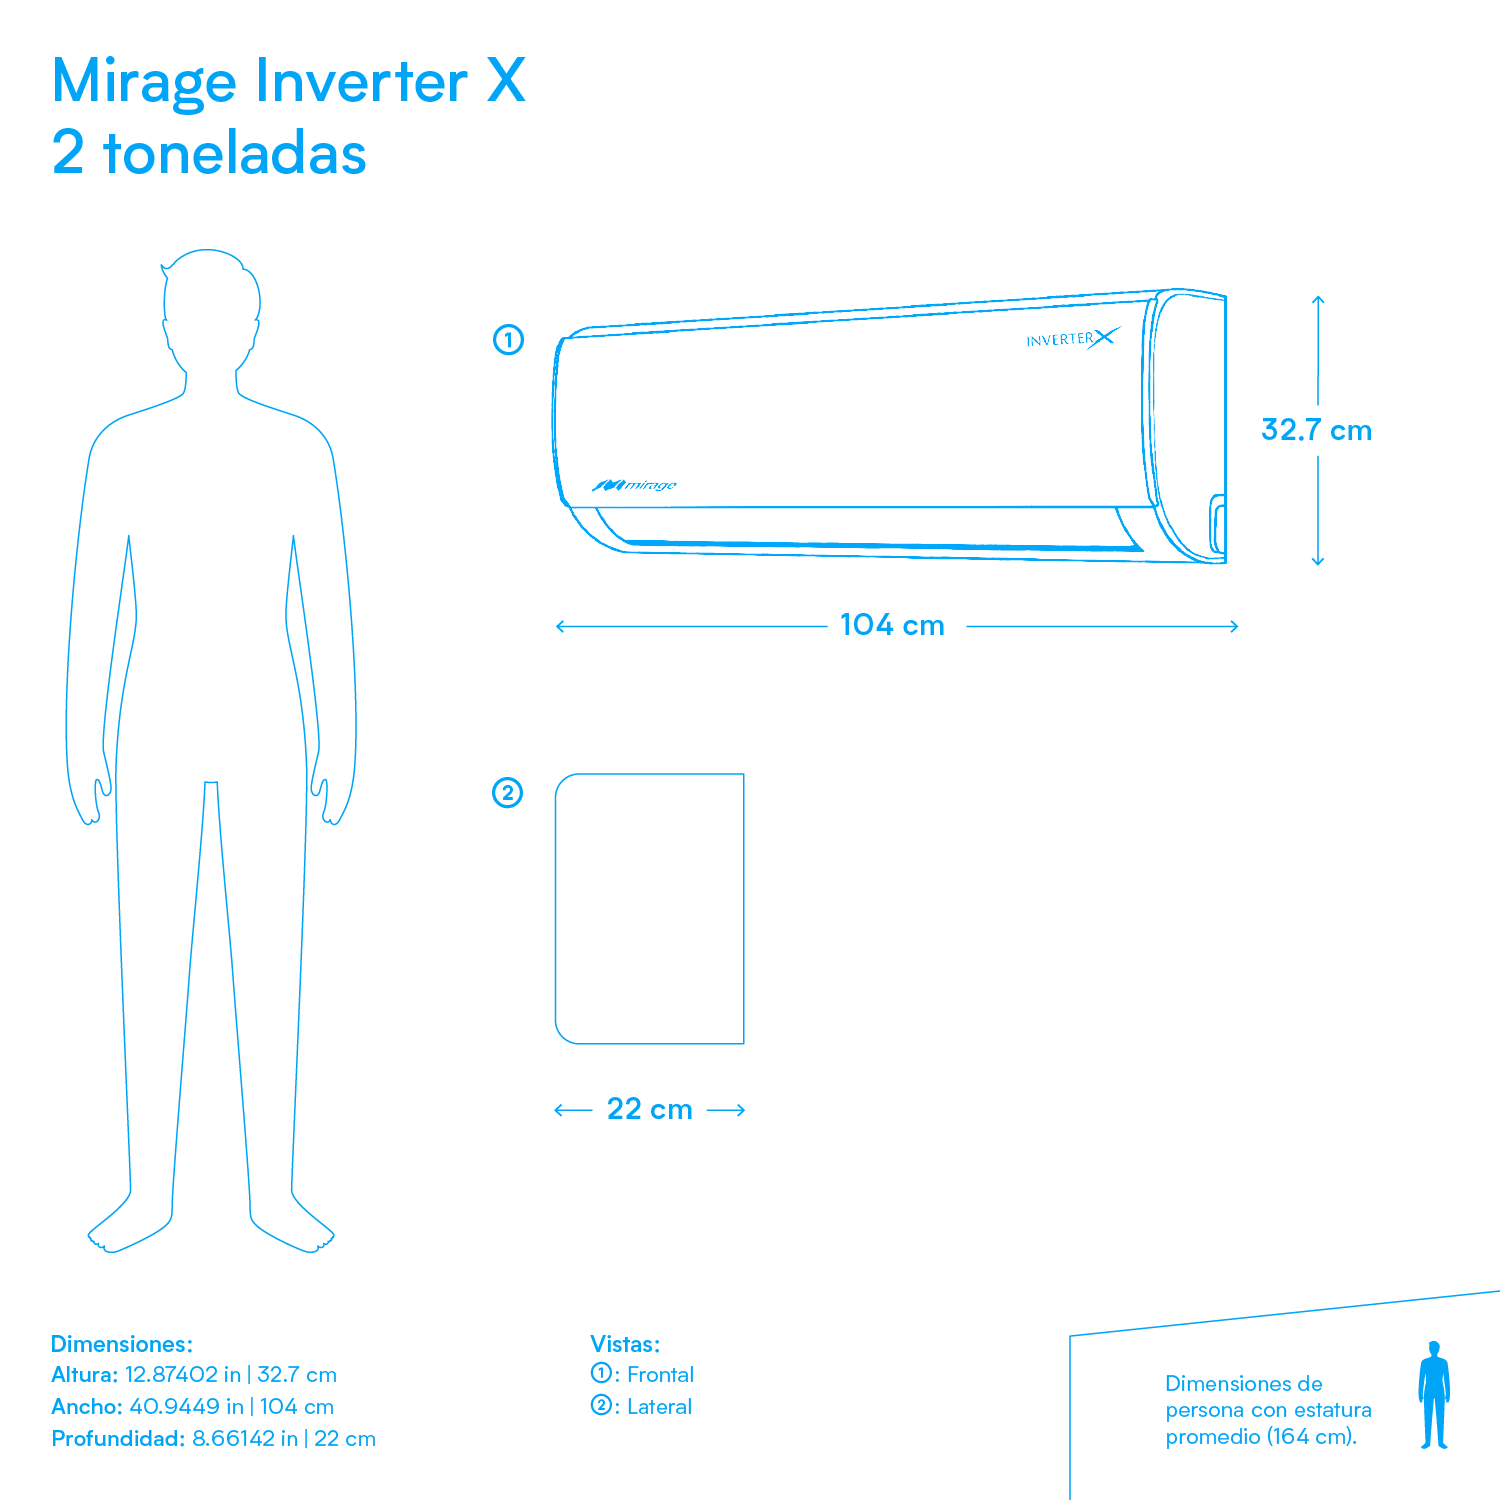 Minisplit Mirage Inverter X32 - 1.5 toneladas - 220v